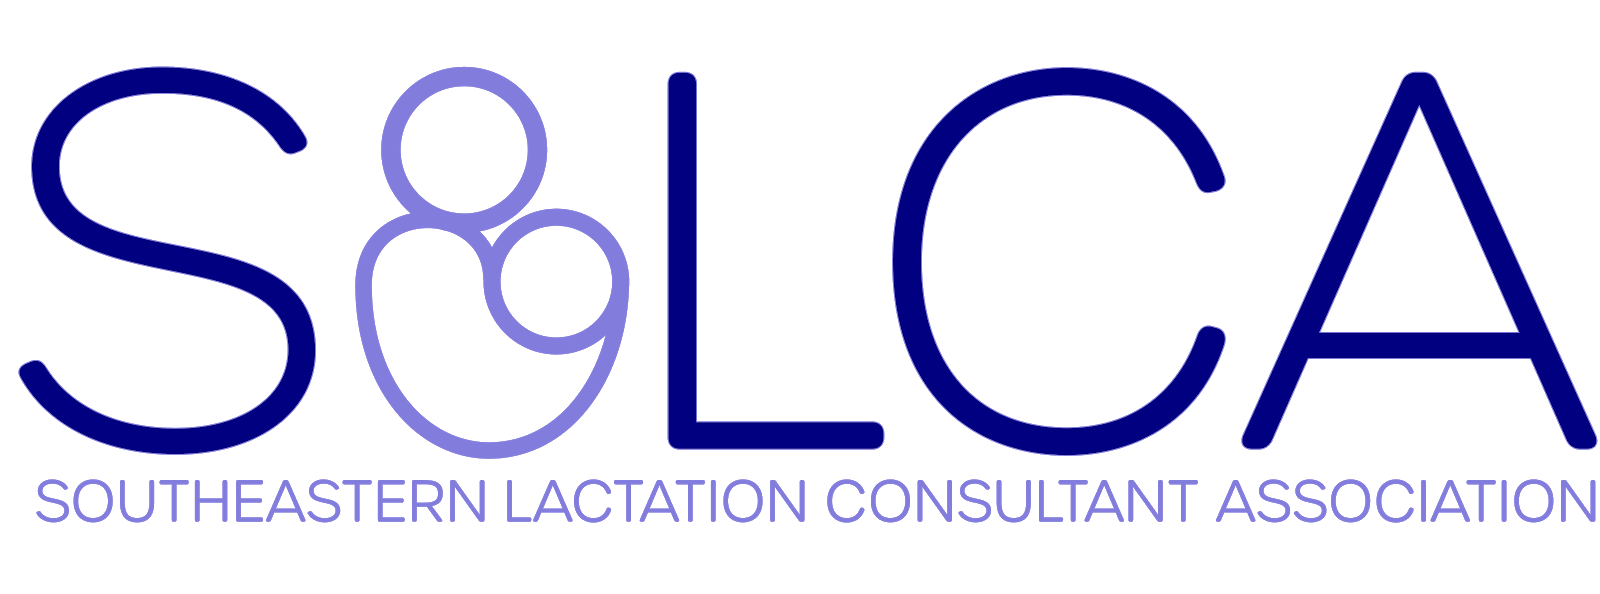 Southeastern Lactation Consultant Association